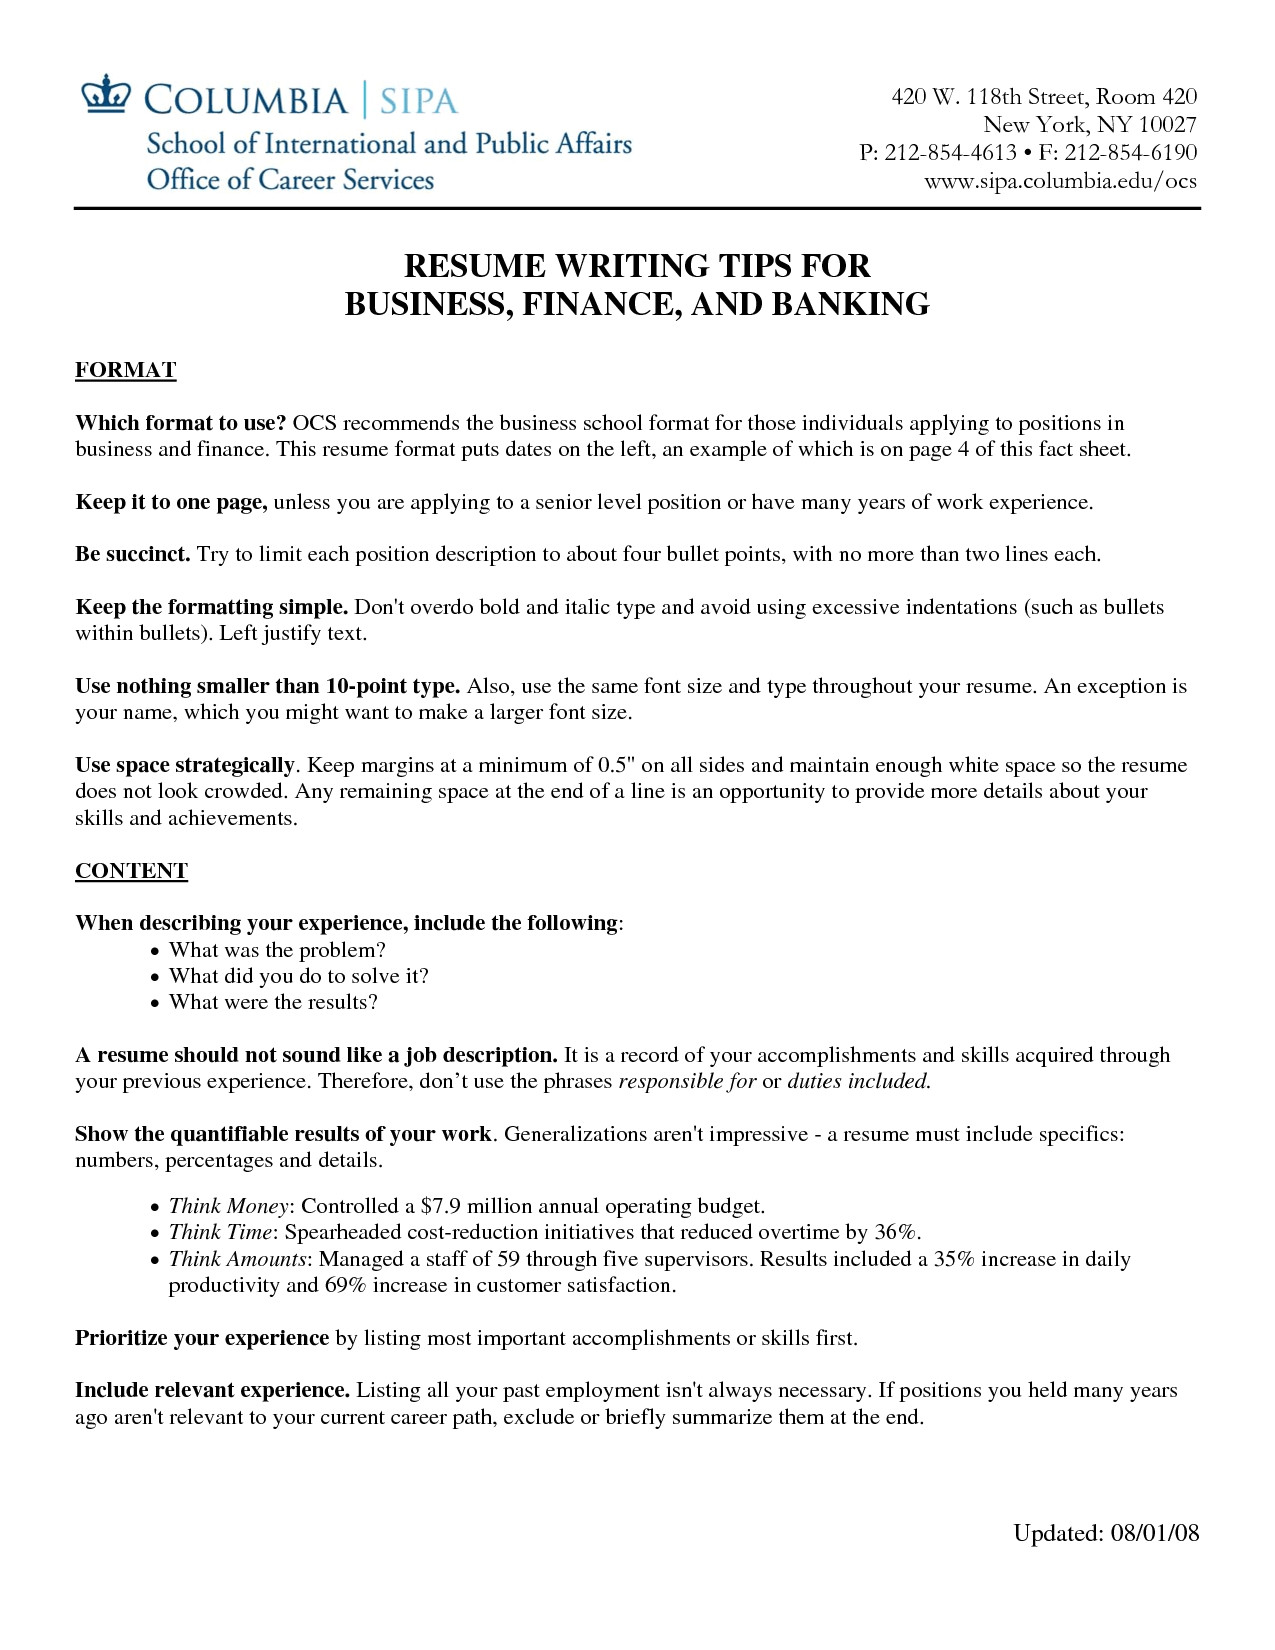 resume for banking jobs freshers